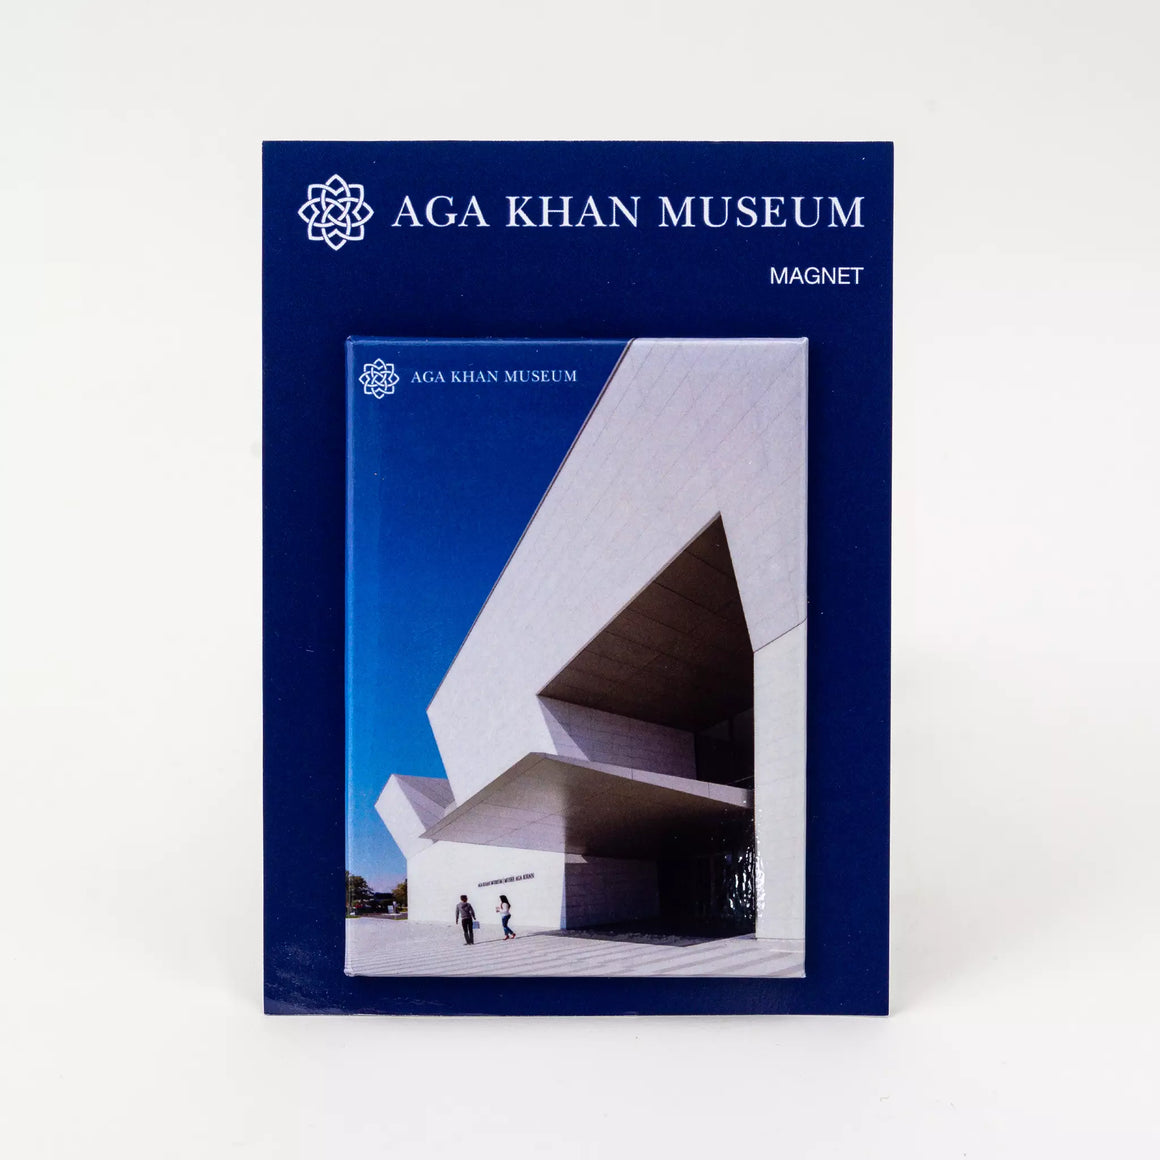 Aga Khan Museum Magnet - Facade